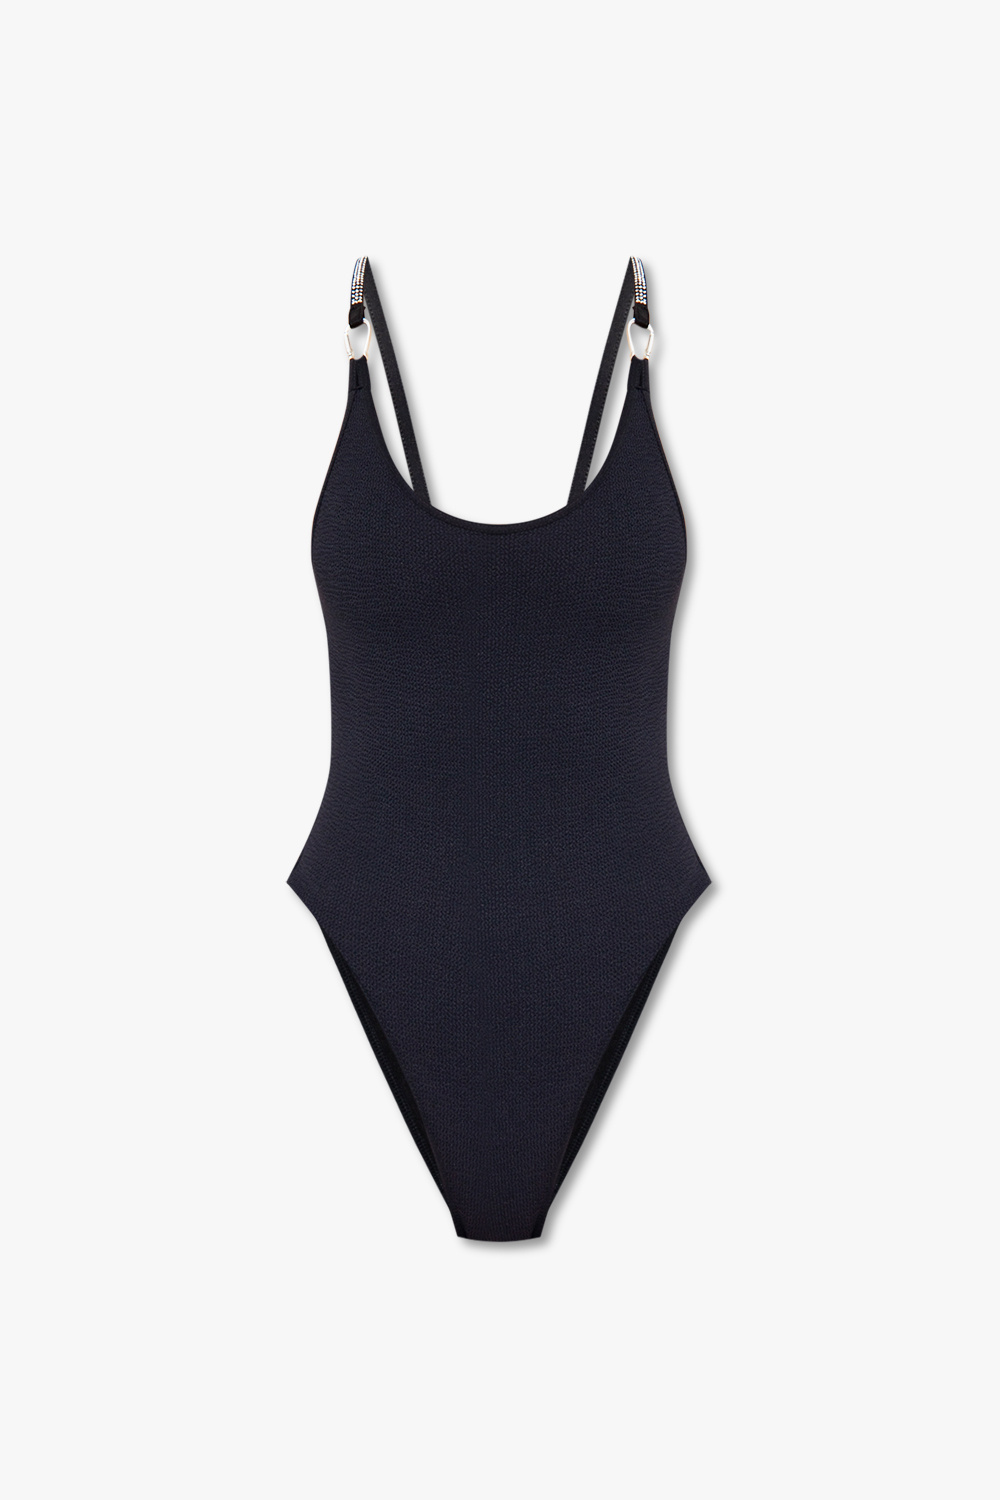 Heron Preston One-piece swimsuit | Women's Clothing | Vitkac